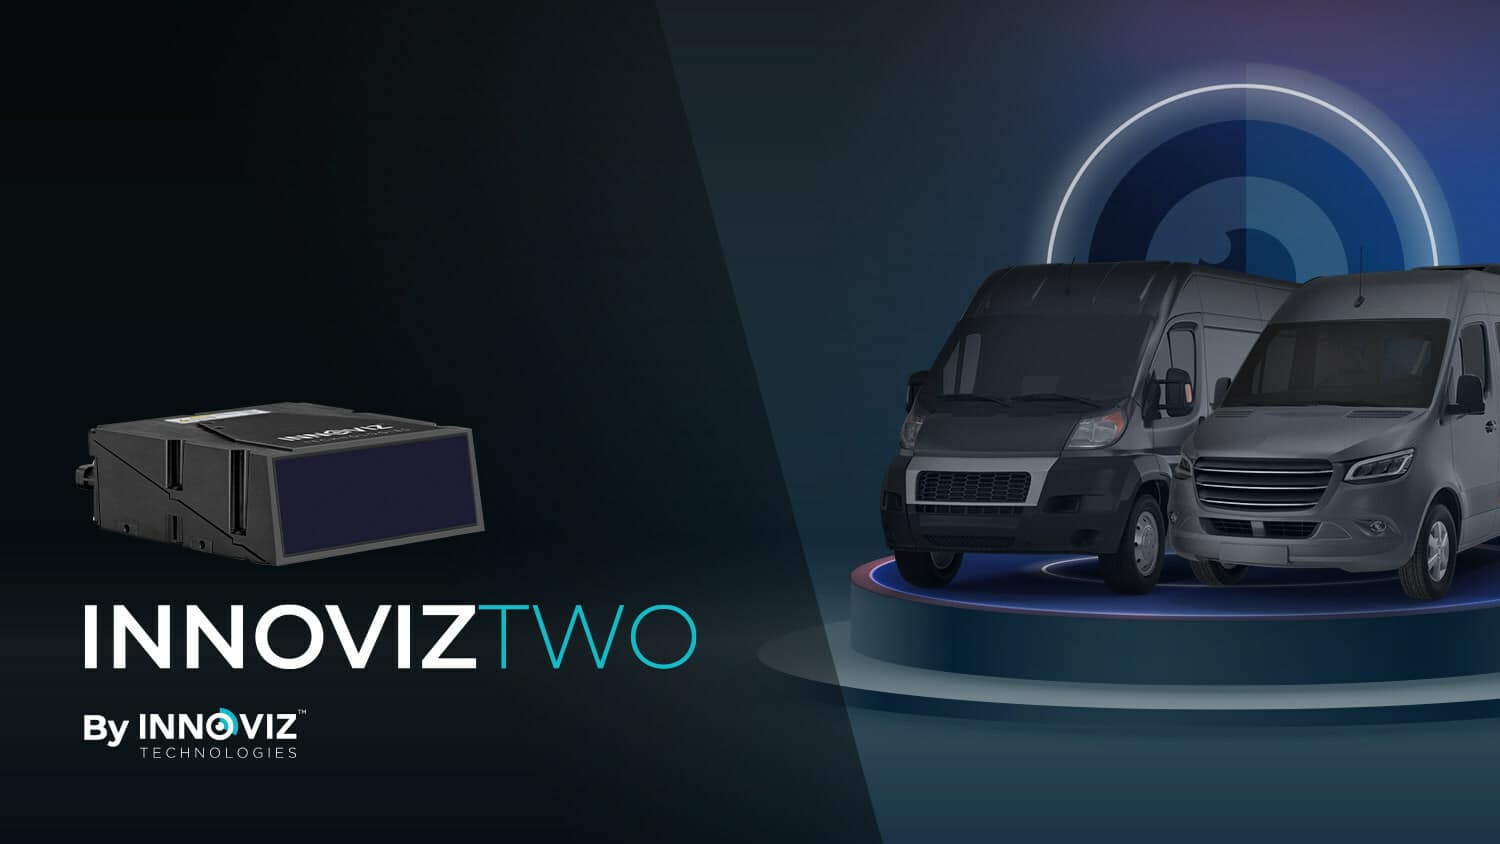 Innoviz Technologies Ltd. Expands LiDAR Usage in Commercial Vehicle Program